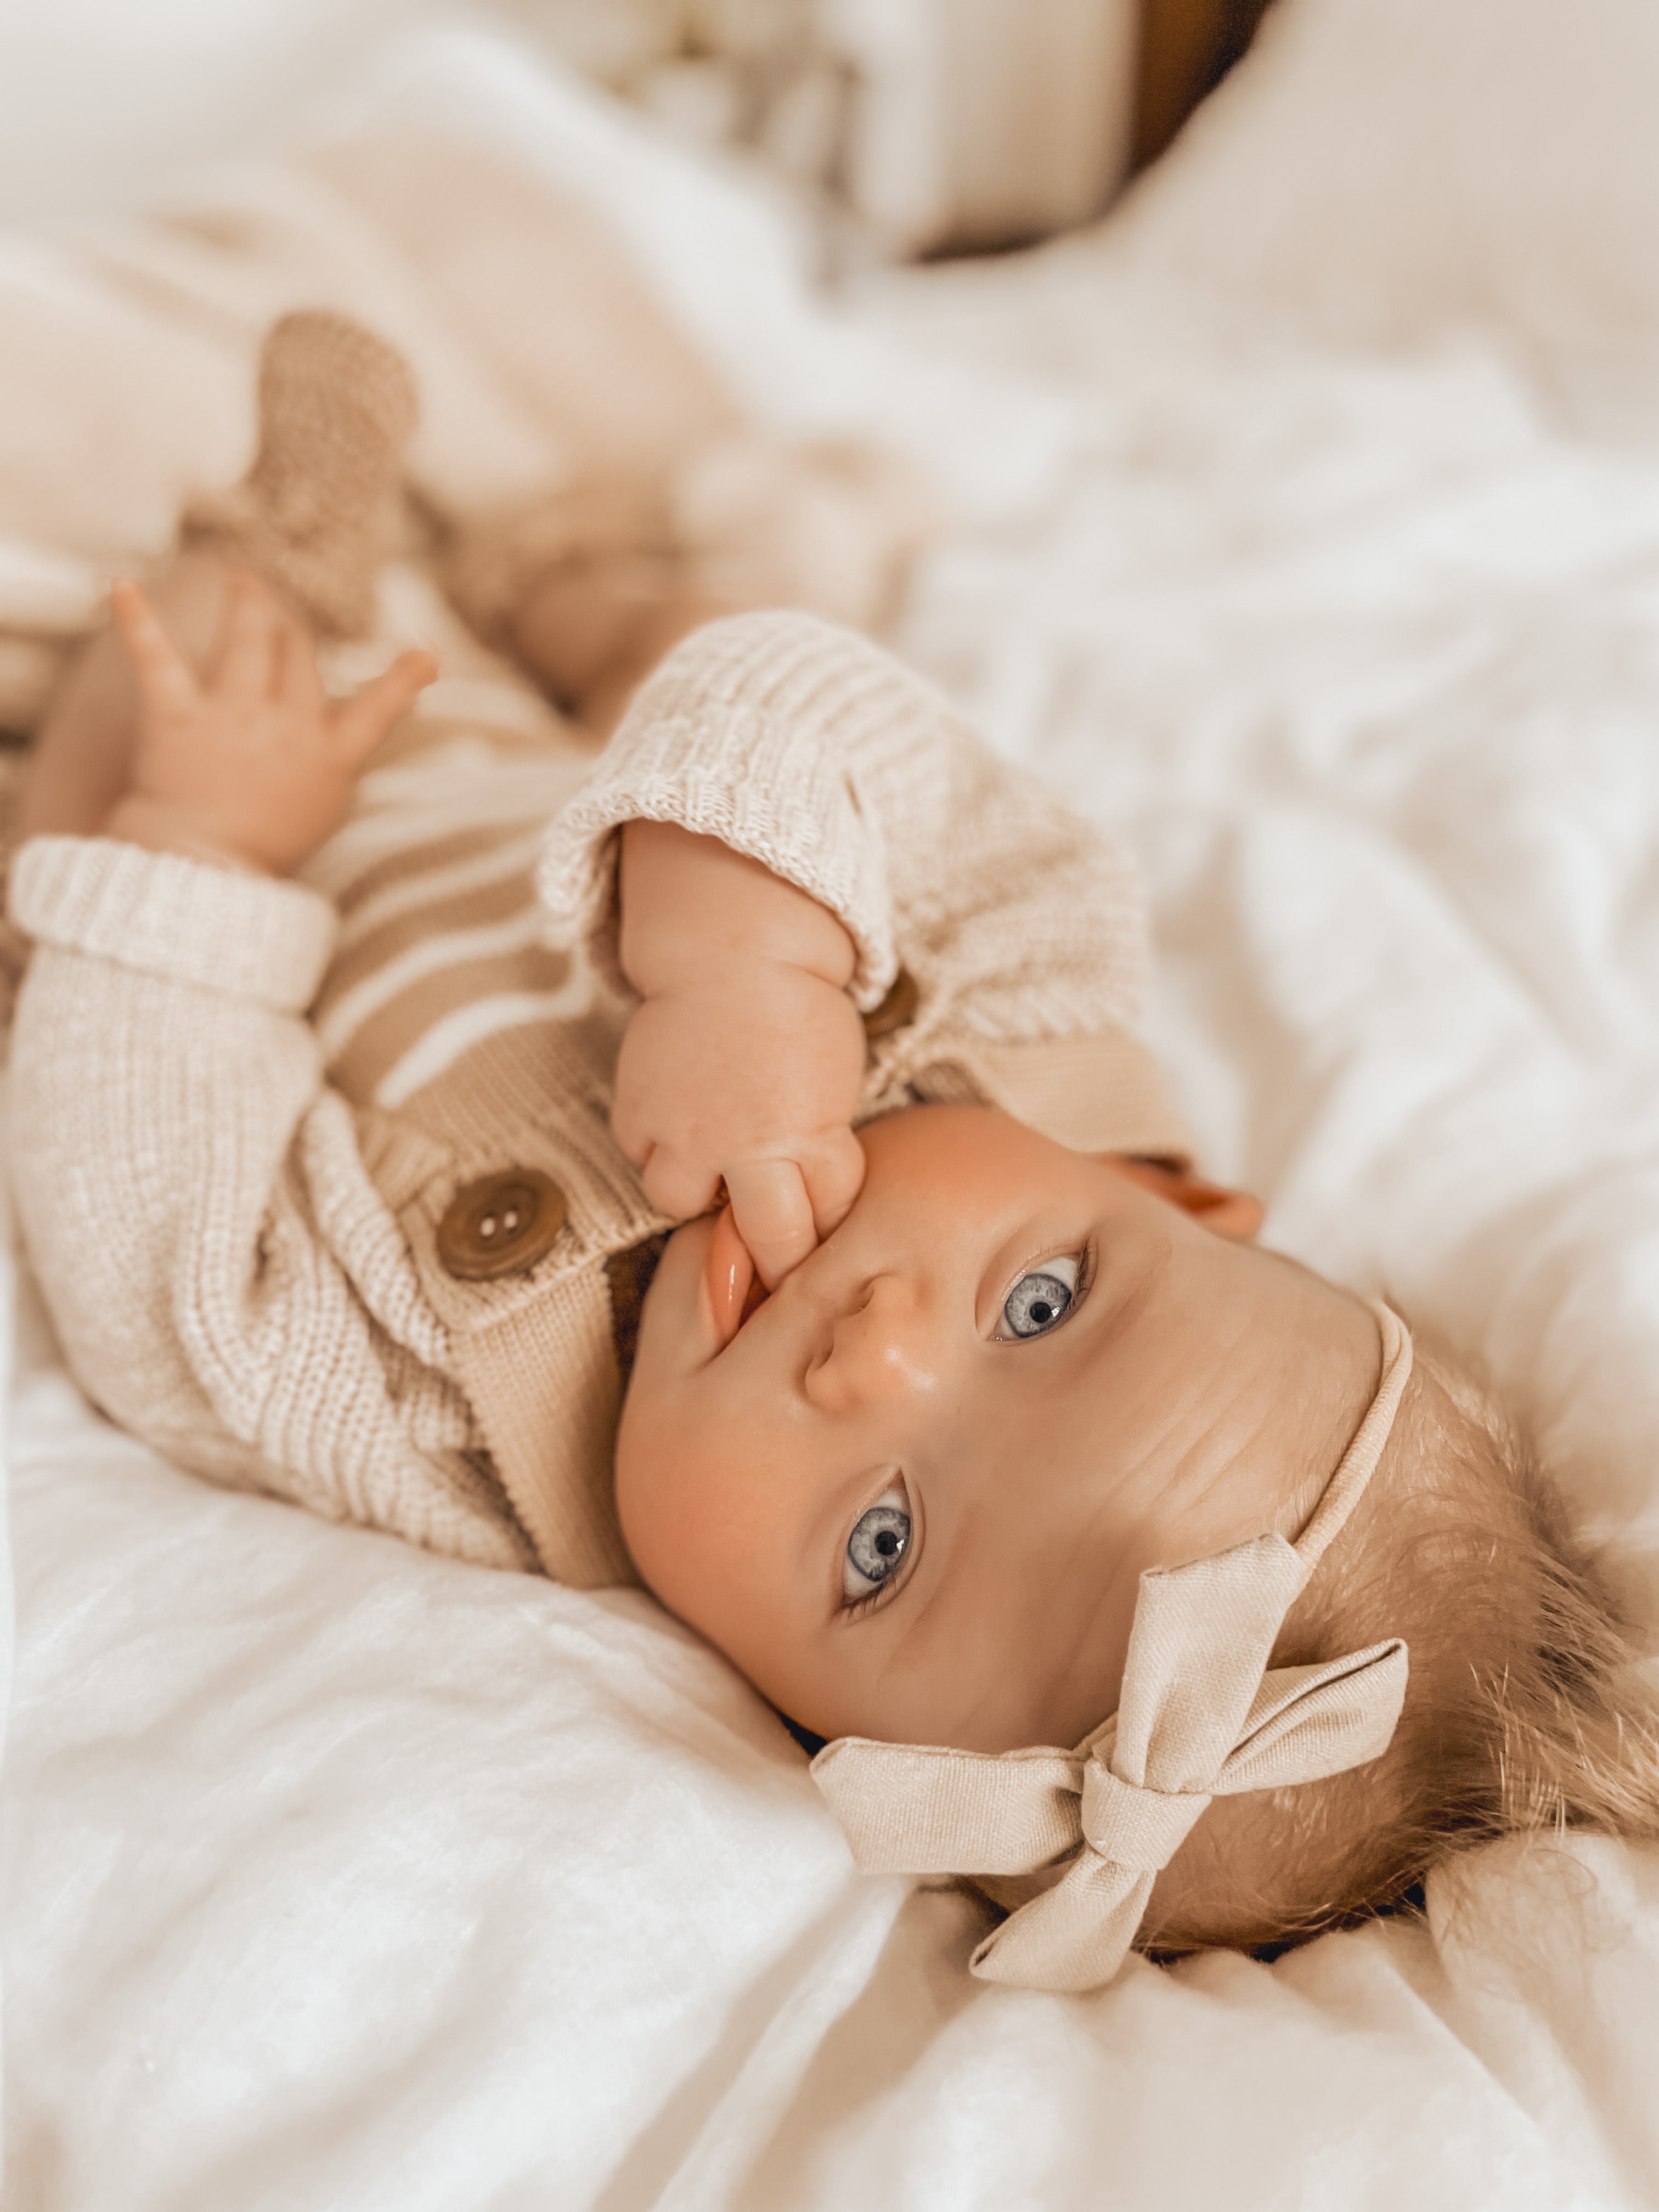 Trends in Baby Girl Clothing Australia, Newborns